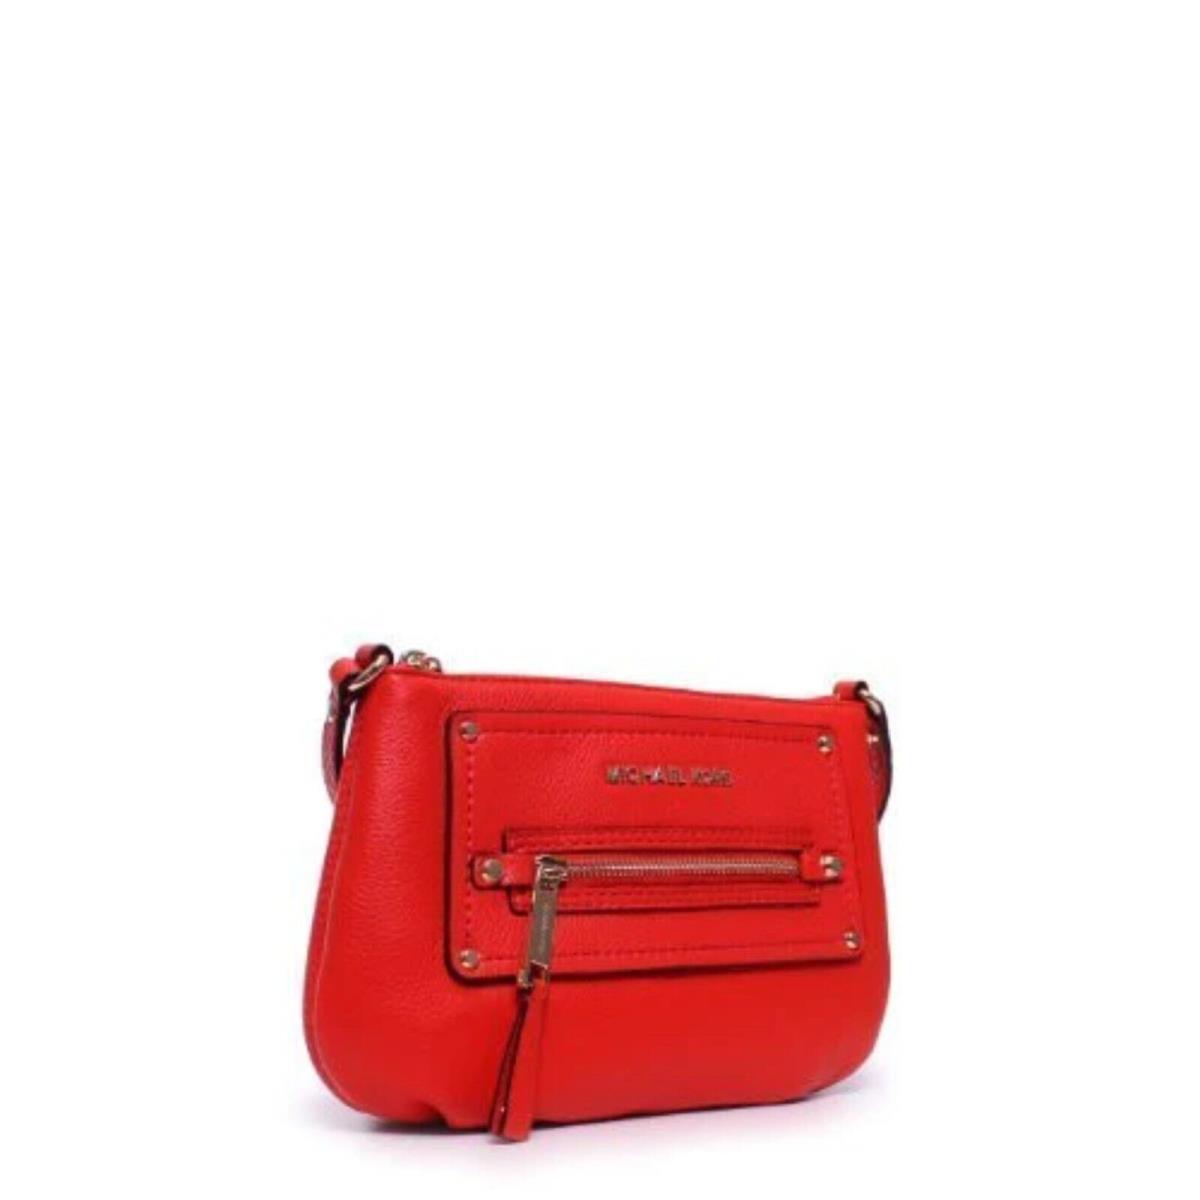 Michael Kors Gilmore Crossbody in Mandarin Red Leather Satchel Handbag Purse